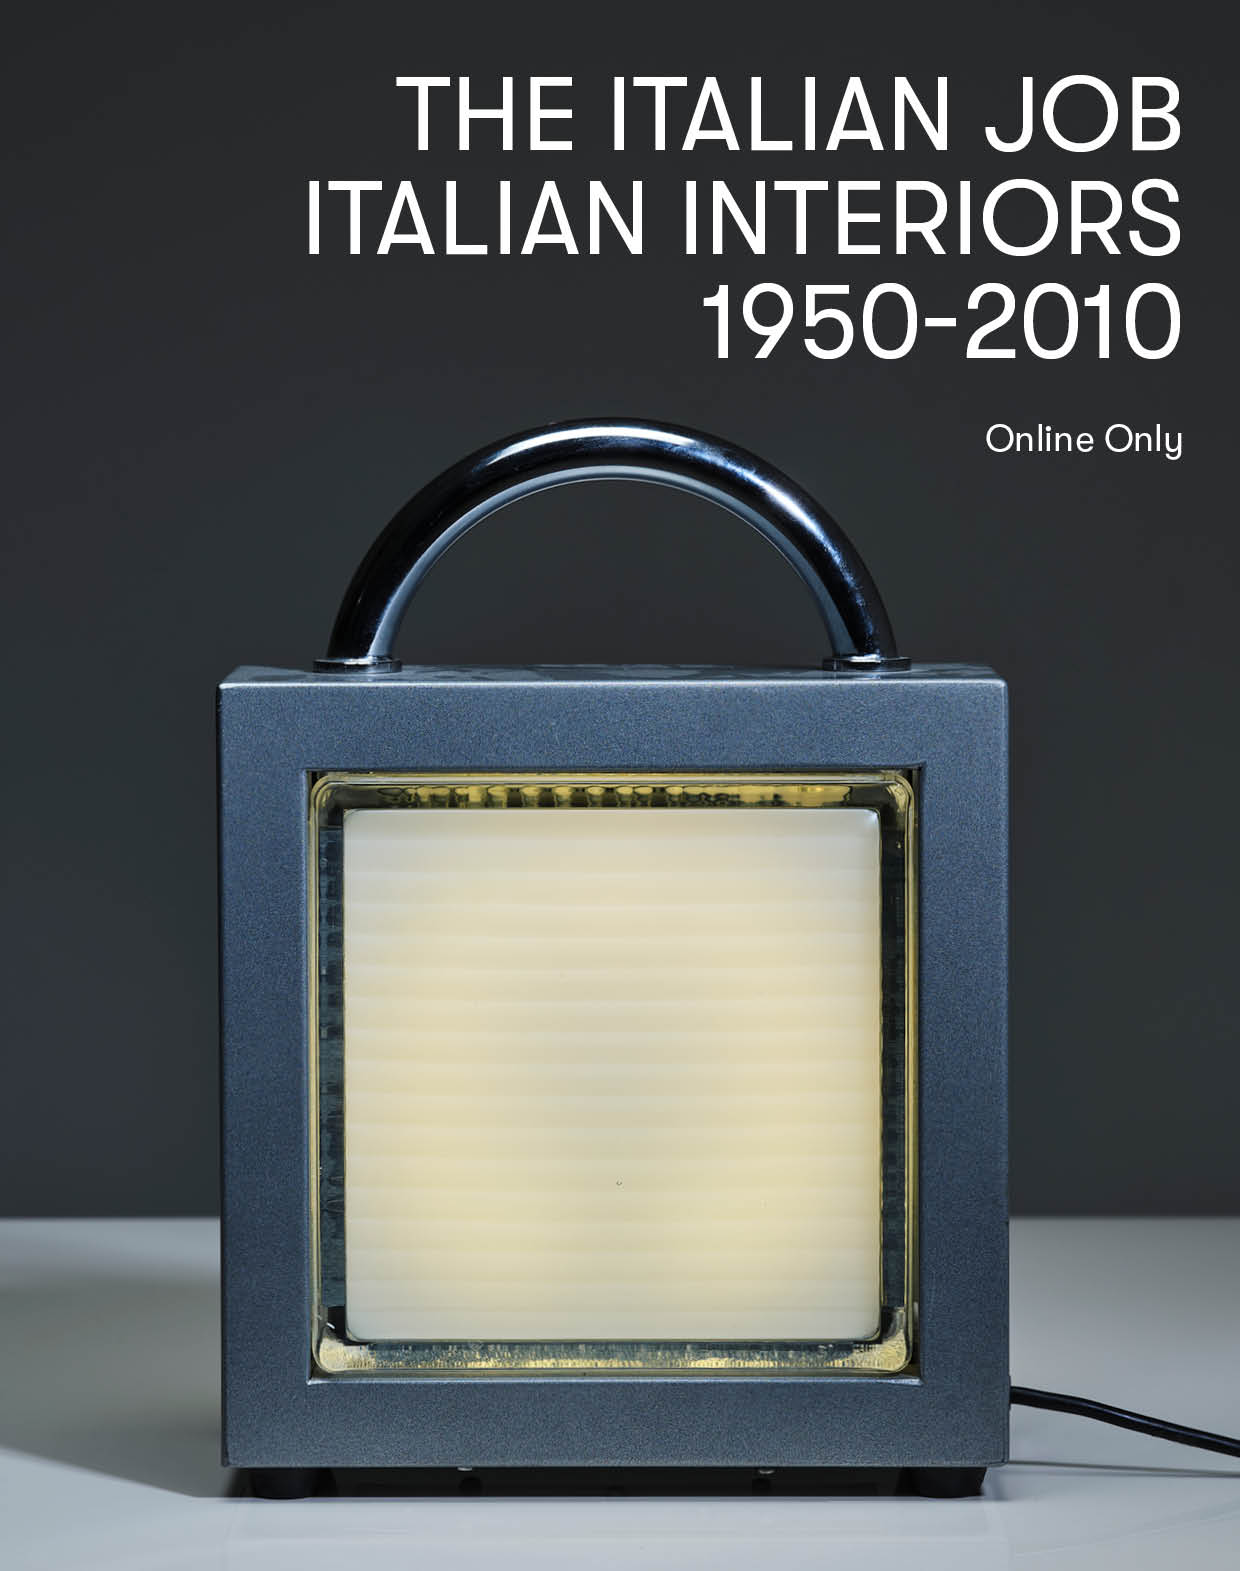 The Italian Job - Italian Interiors 1950-2010